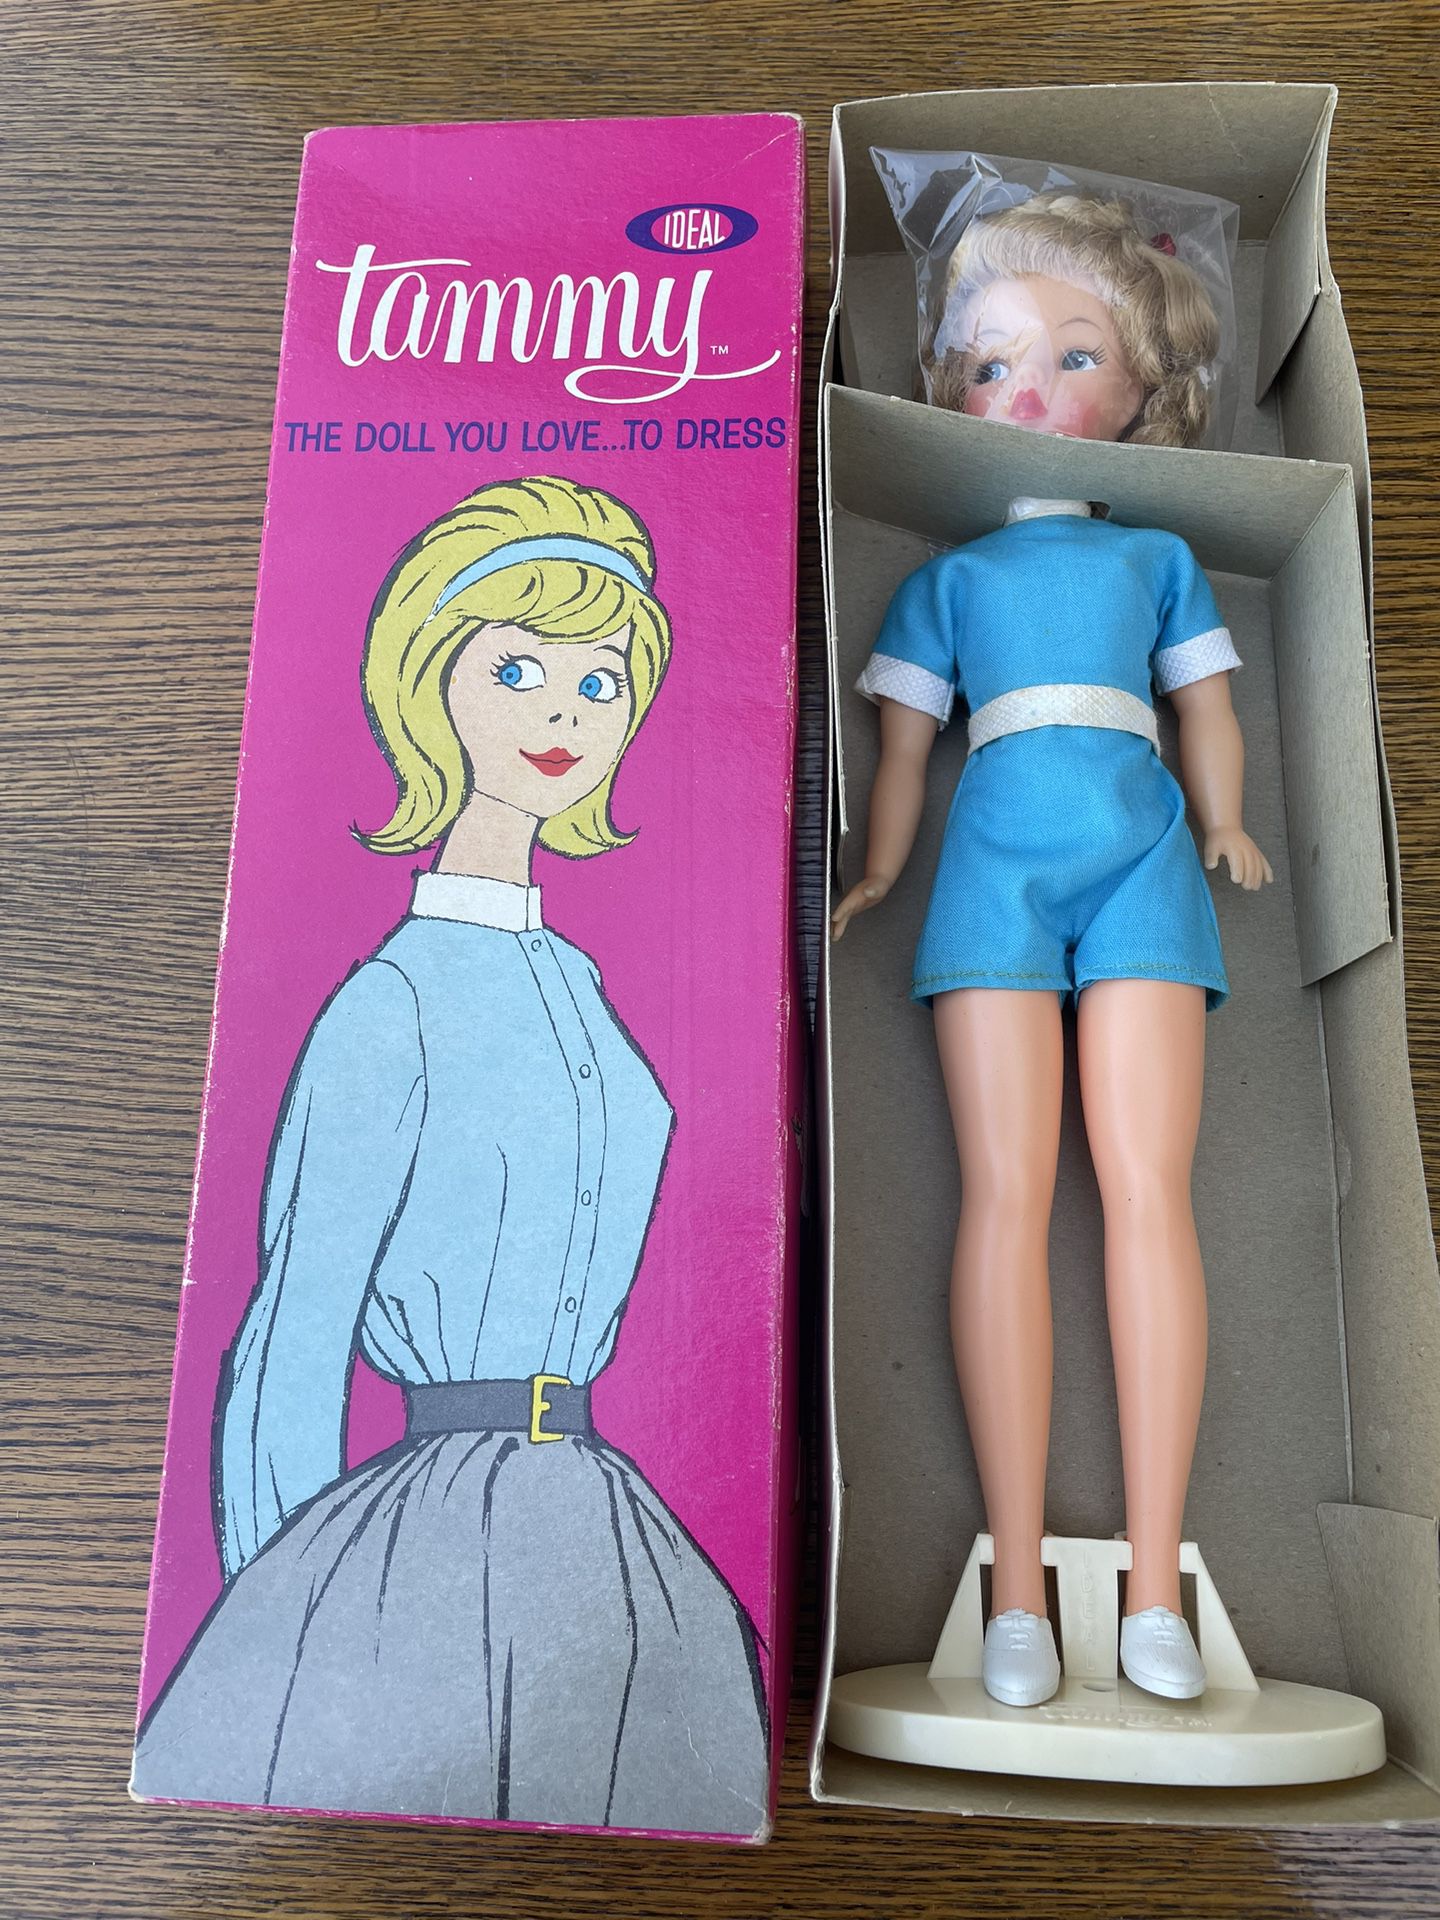 Vintage Ideal Tammy Doll - 1962